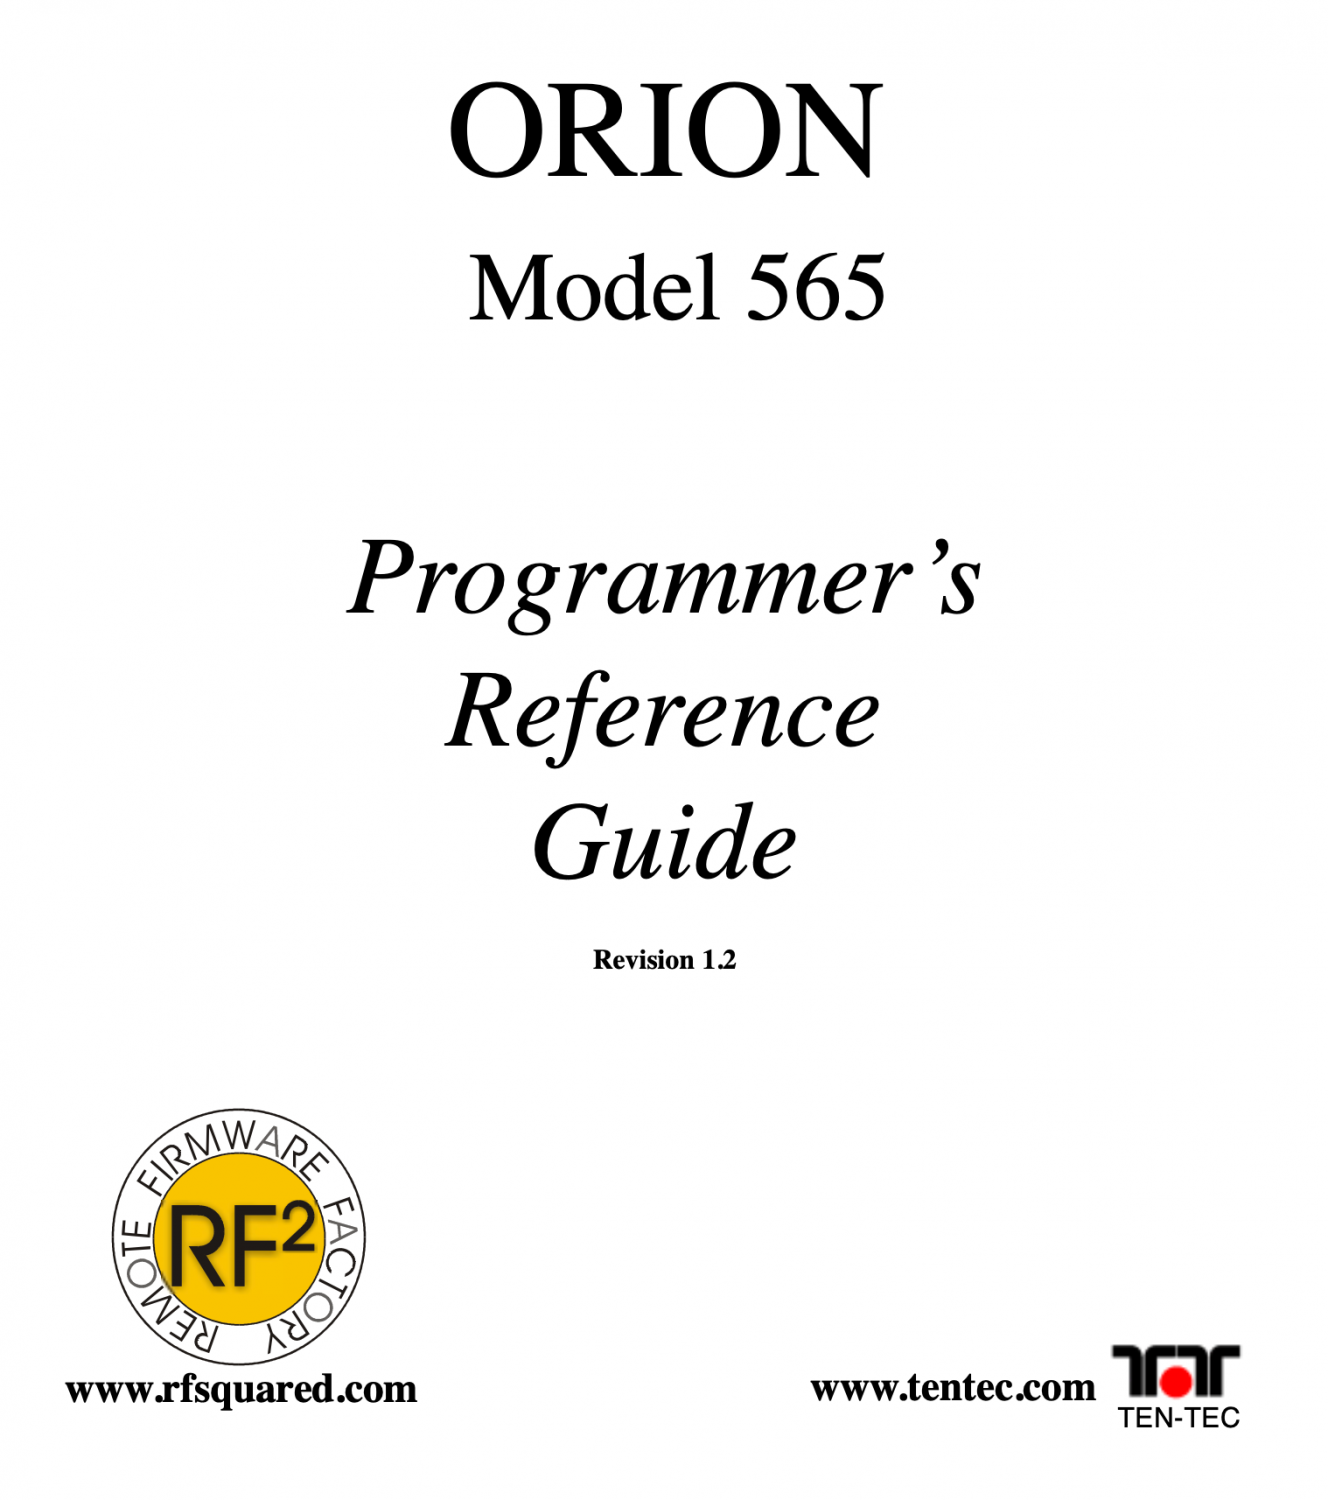 Ten-Tec - Orion I Model 565 - HF Transceiver - Programming Reference Guide v1.2